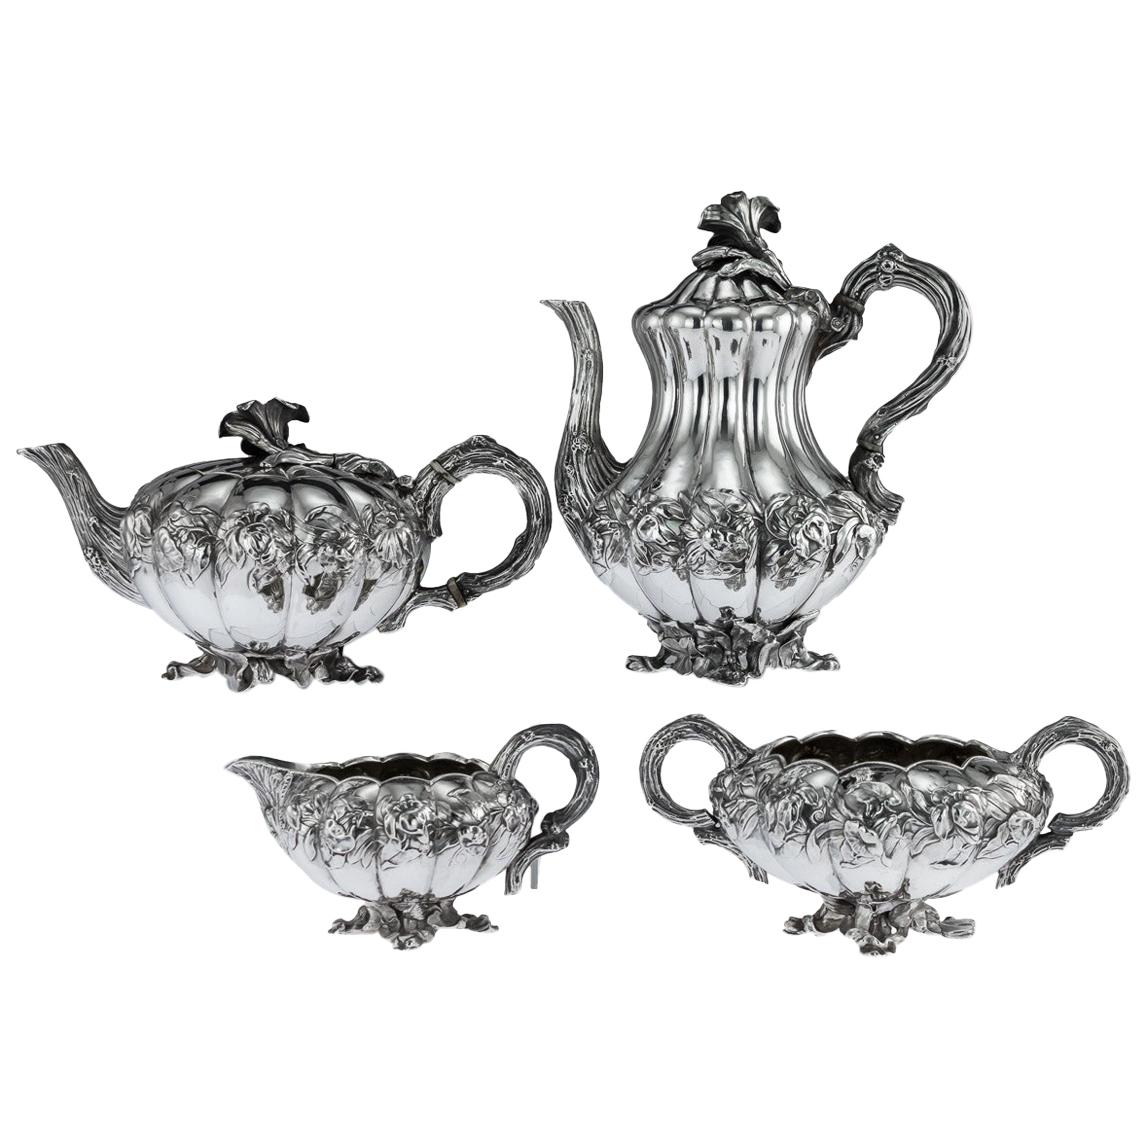 Regency Solid Silver 4-Piece Tea and Coffee Service, London, circa 1831